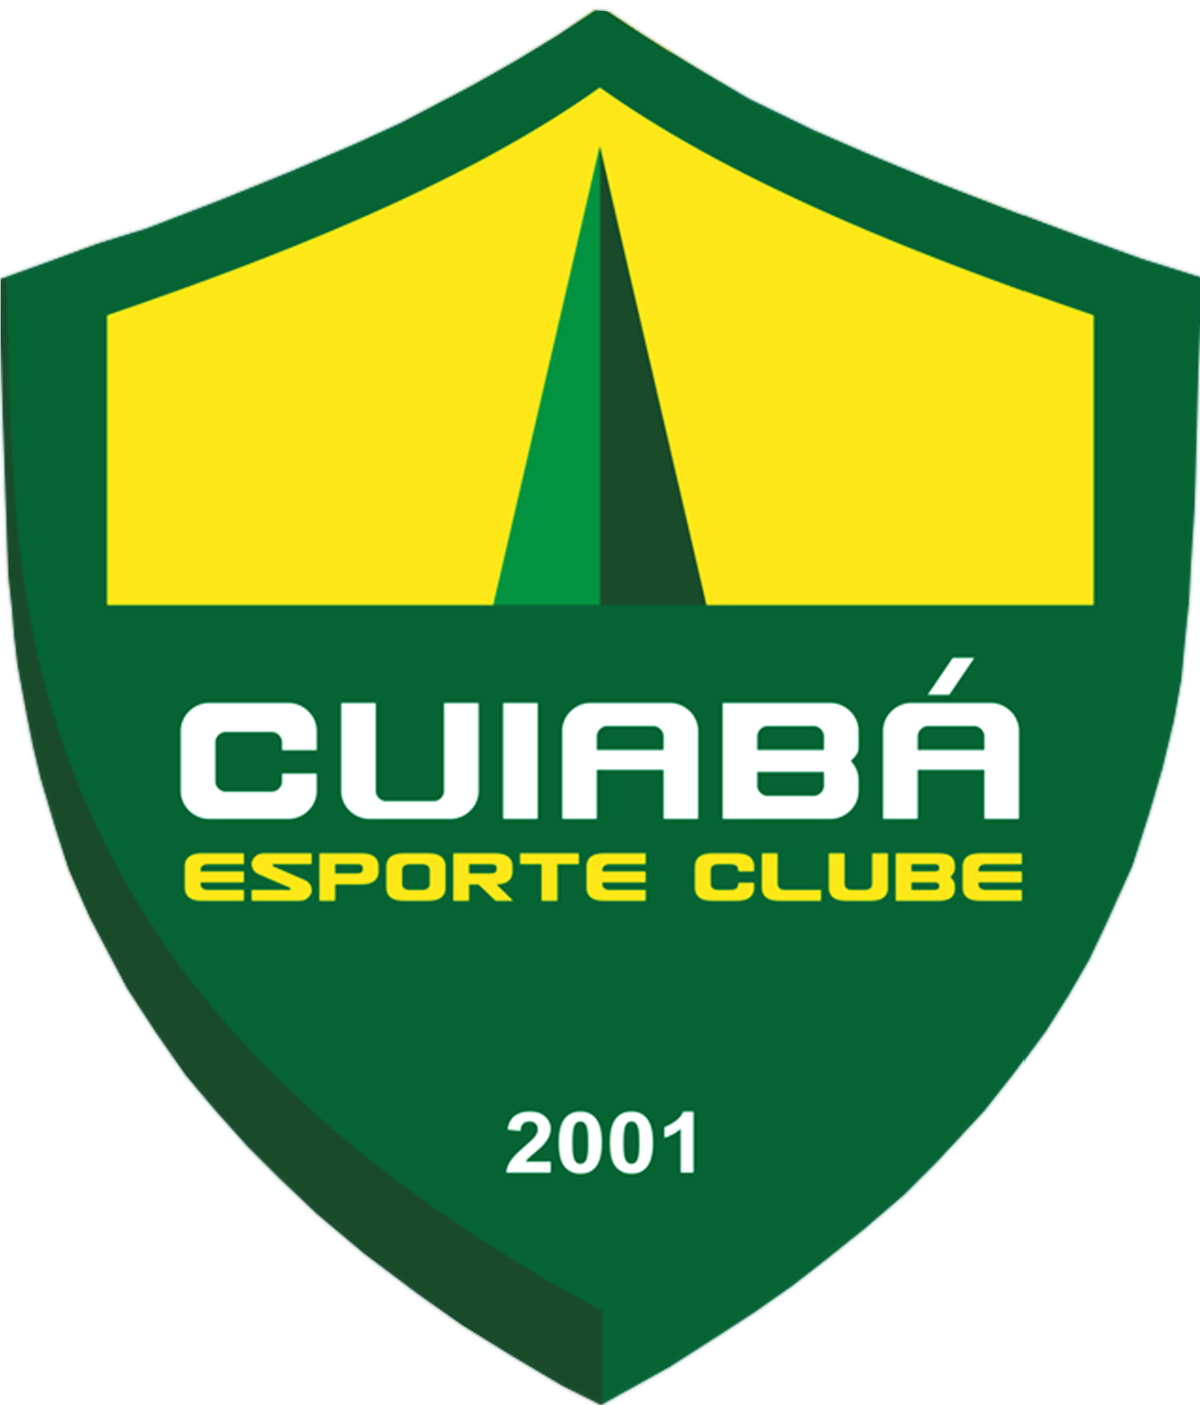 Cuiabá vs RB Bragantino Prediction: Cuiabá has not lost in four games